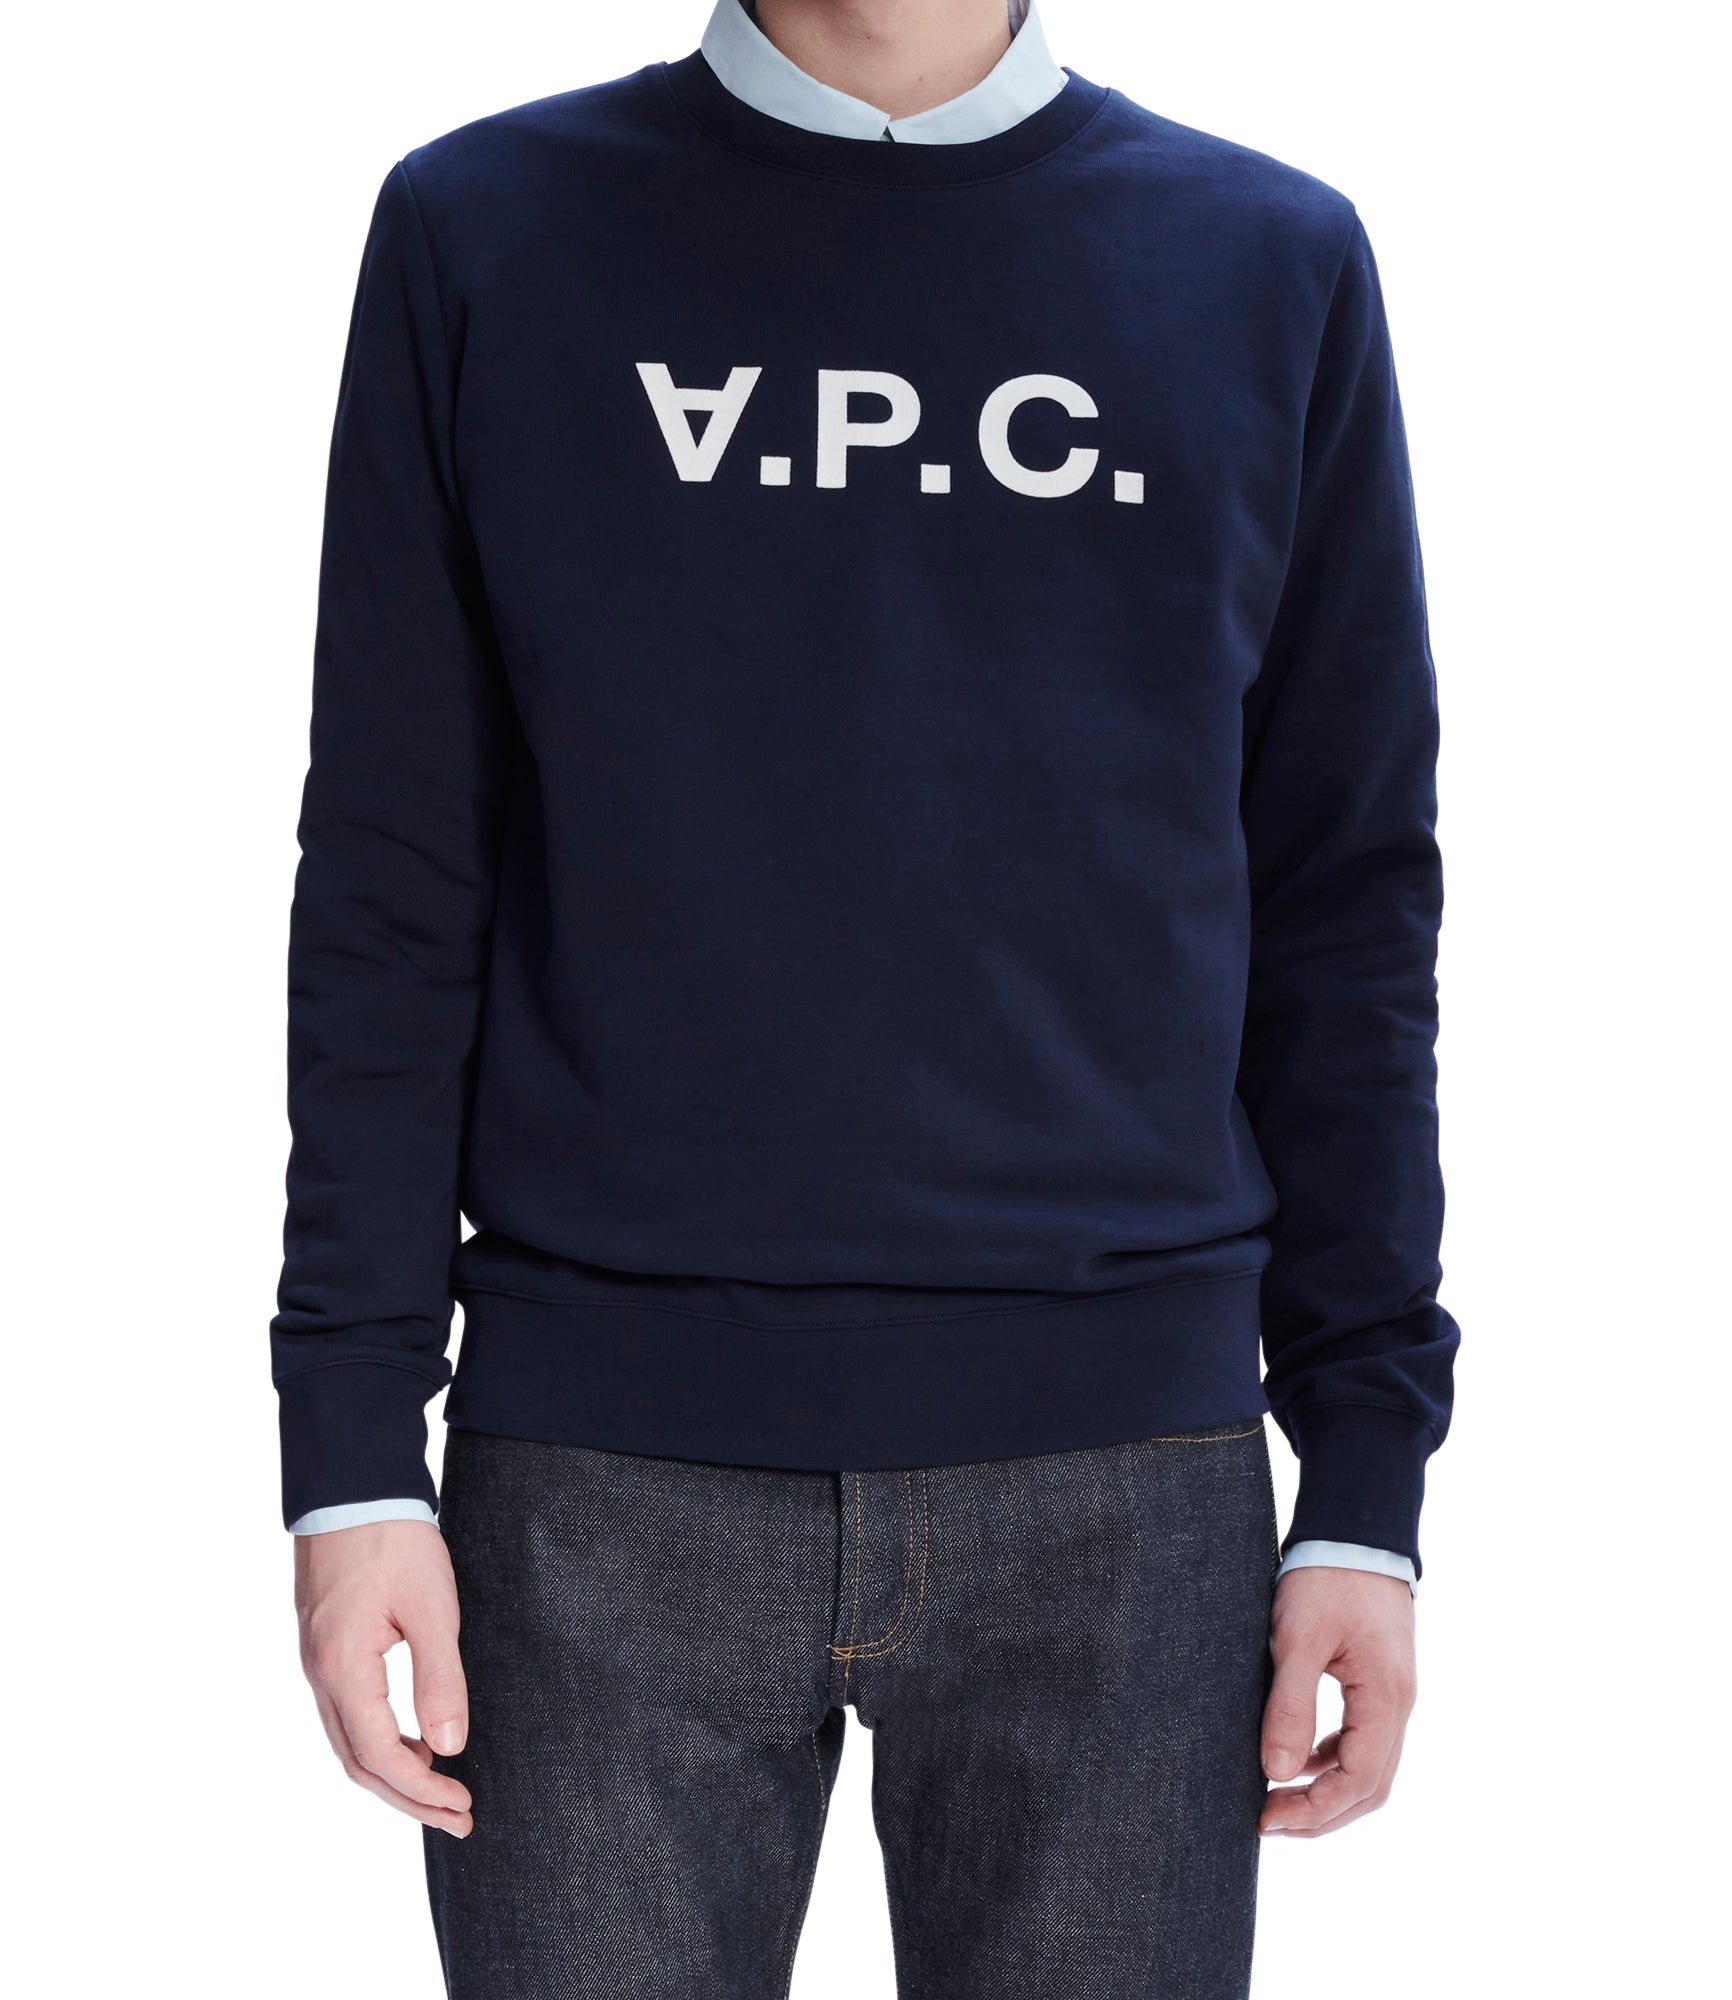 VPC sweatshirt - 4